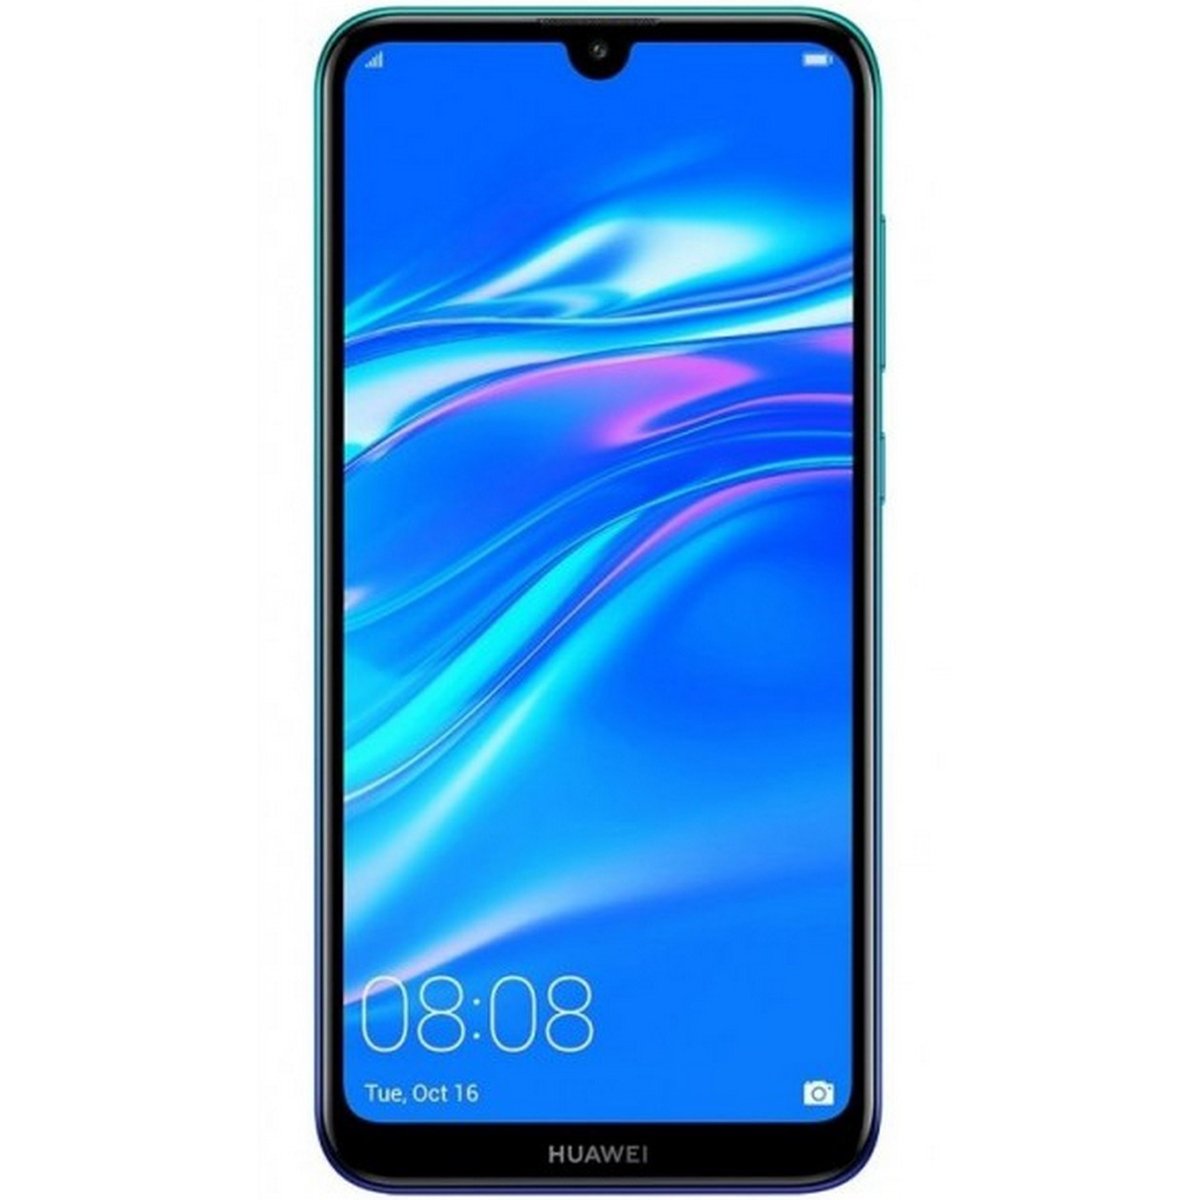 Huawei Y7 Prime 2019 64GB Blue